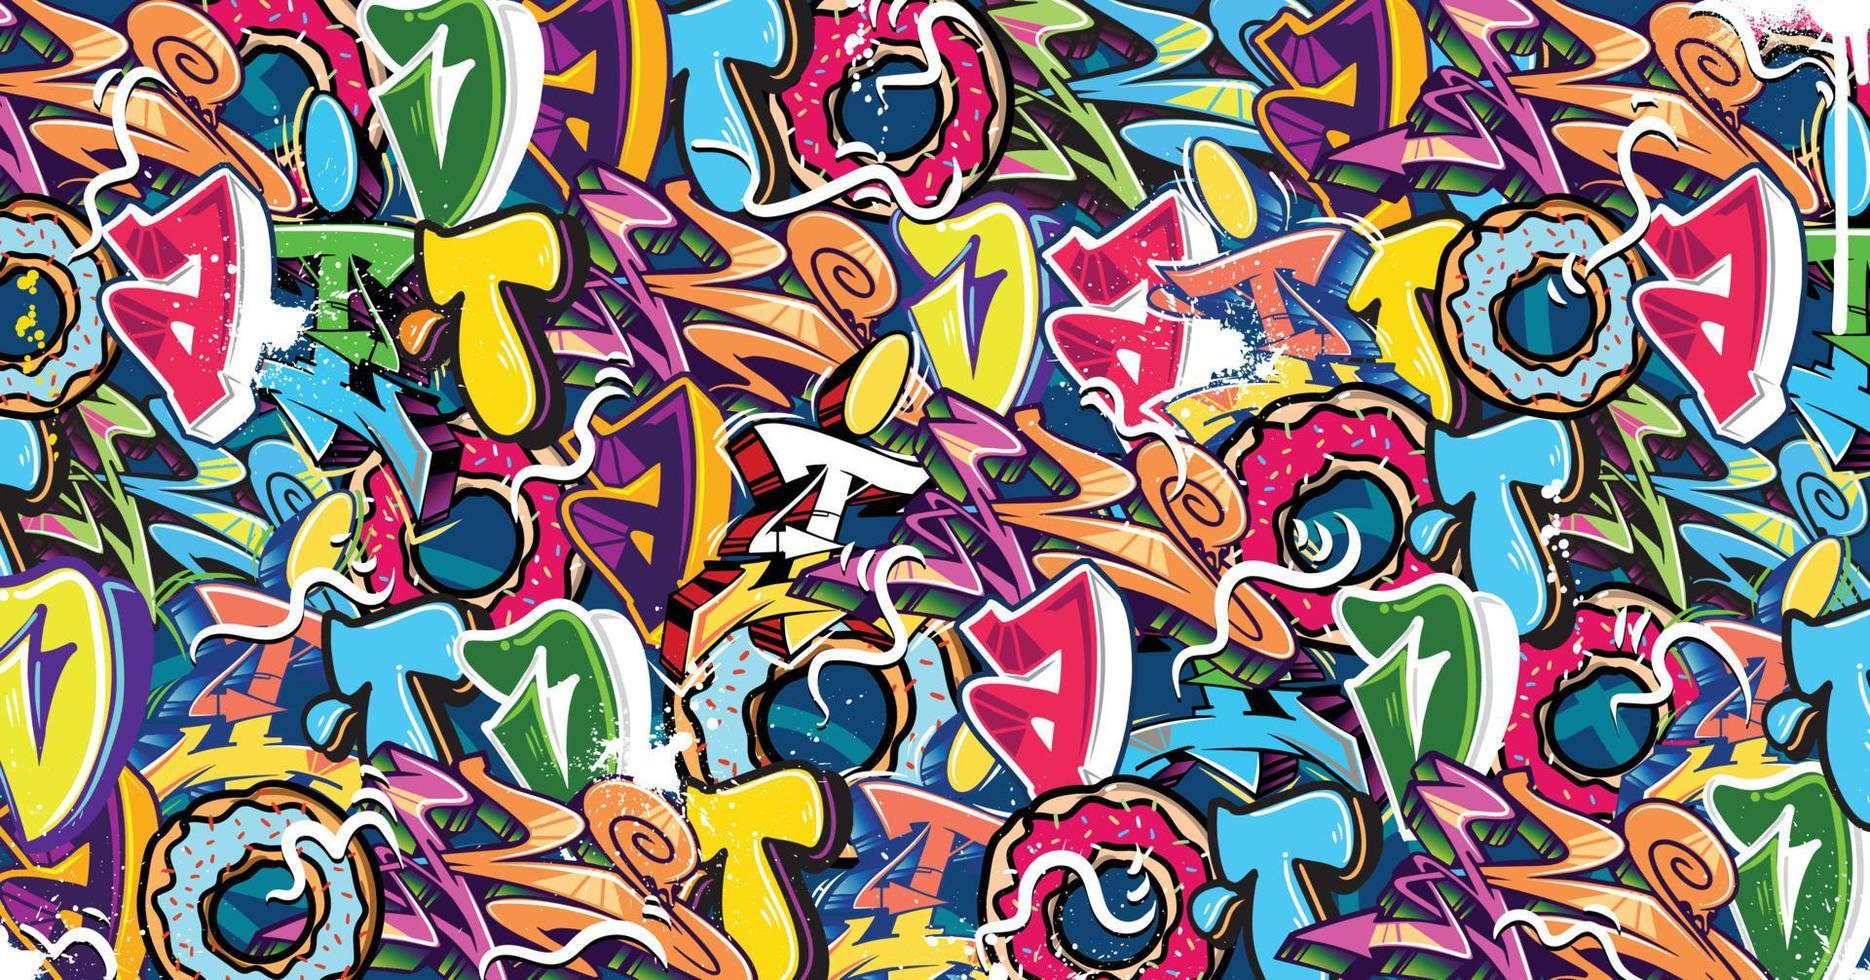 kleurrijk graffiti muur kunst achtergrond straat kunst hiphop stedelijk vector illustratie achtergrond. naadloos verbazingwekkend graffiti kunst achtergrond